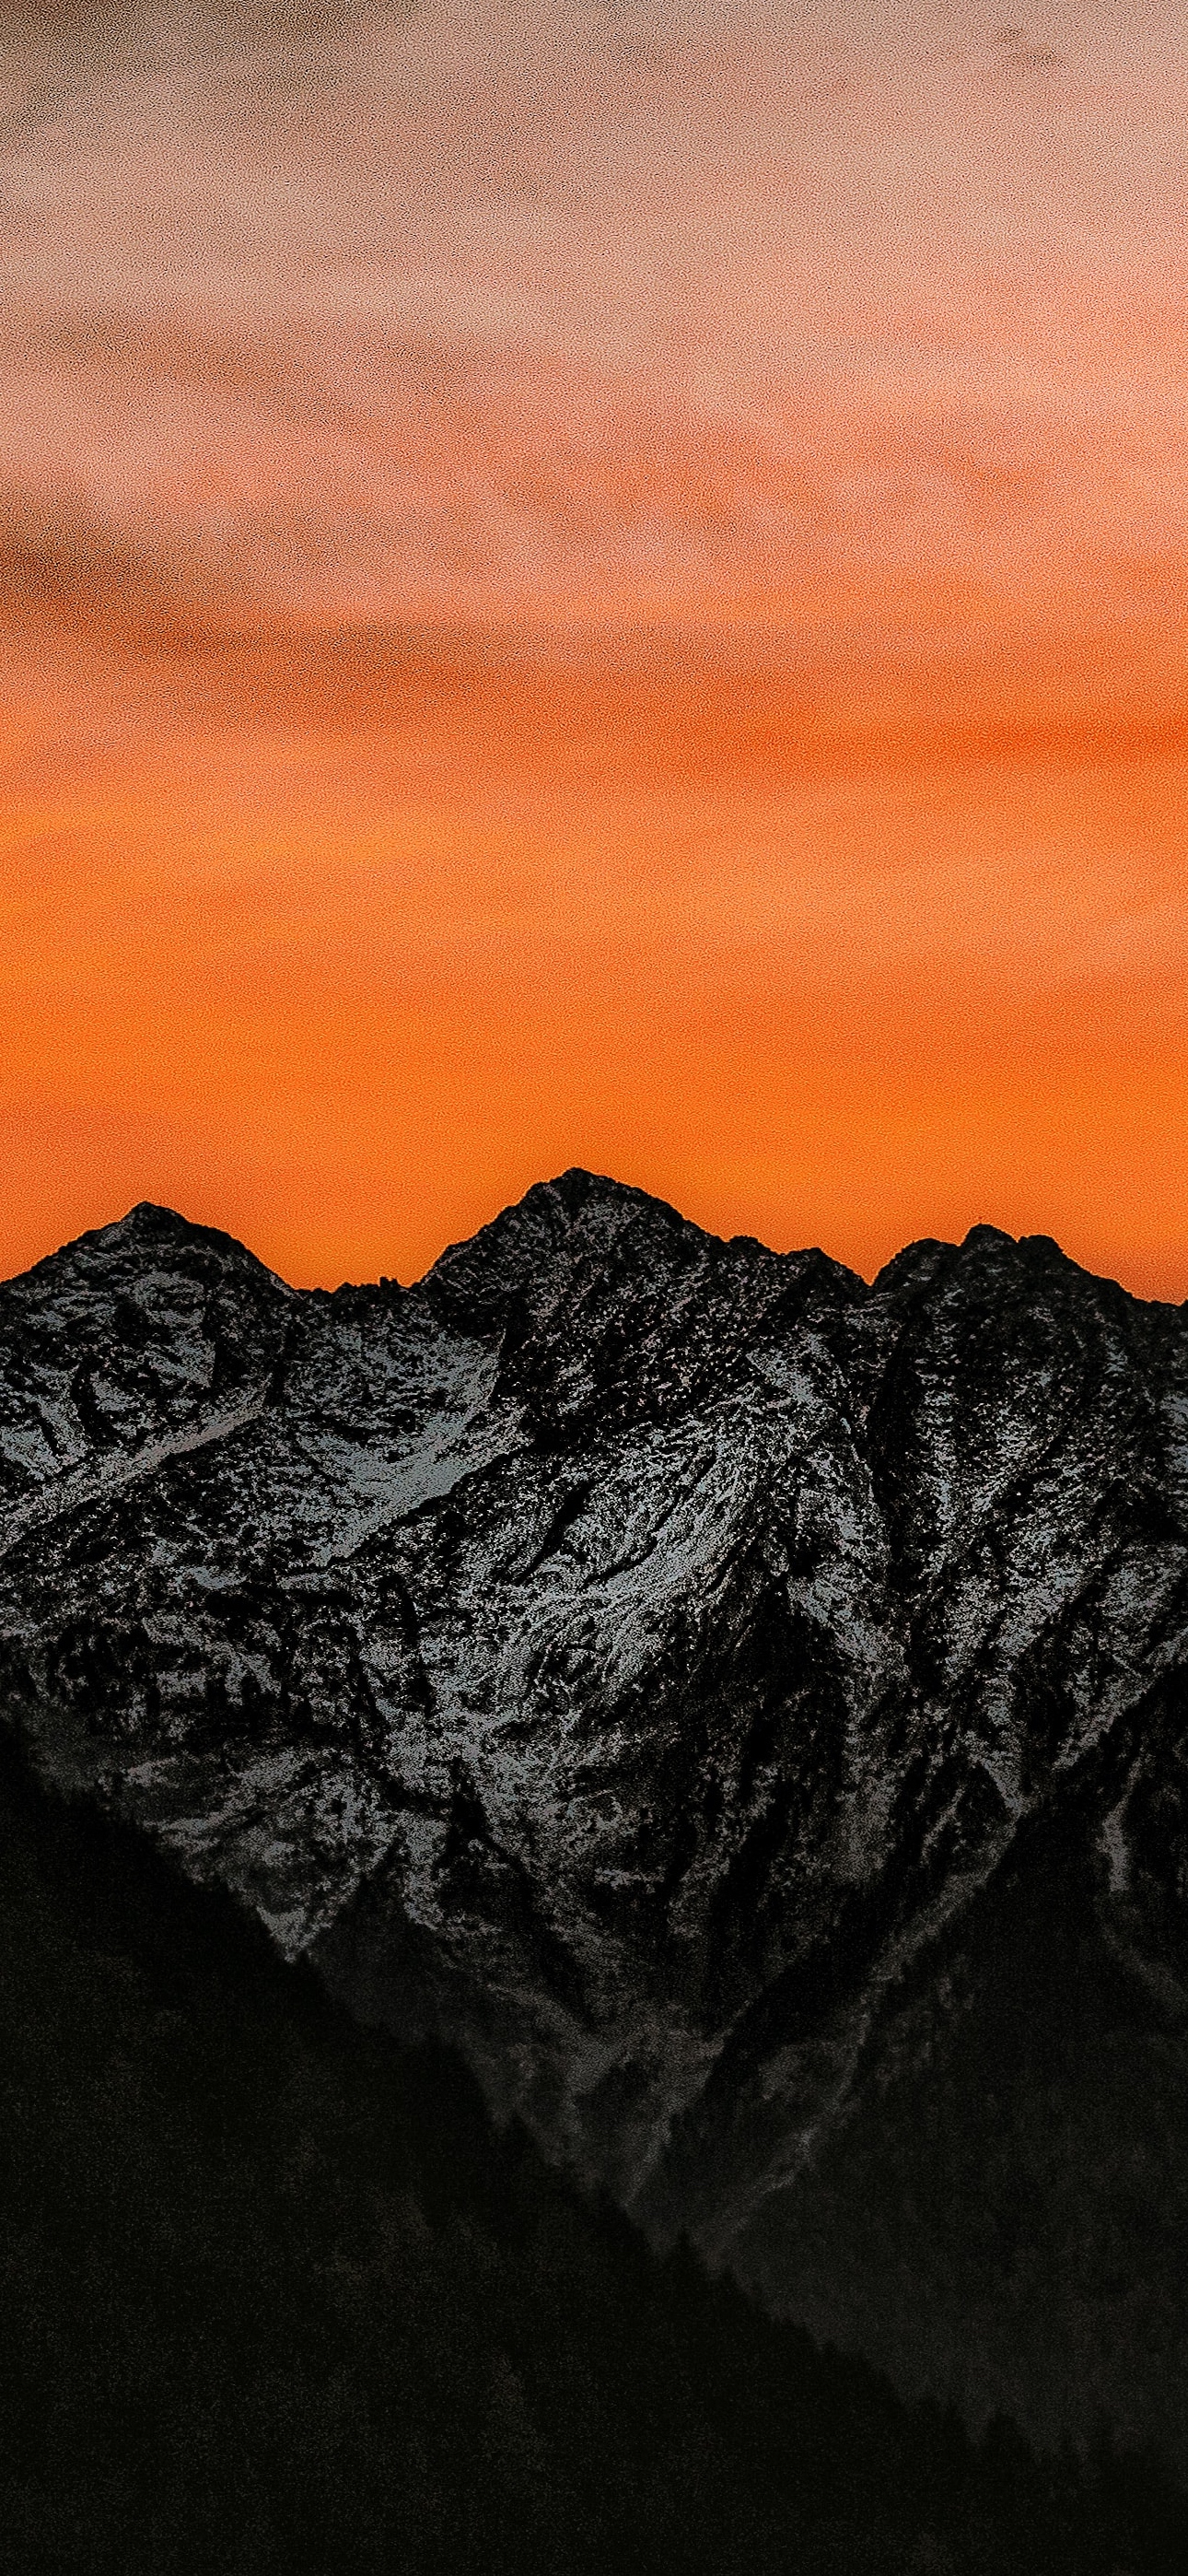 Mountain orange sunset iPhone wallpaper Eberhard Grossgasteiger